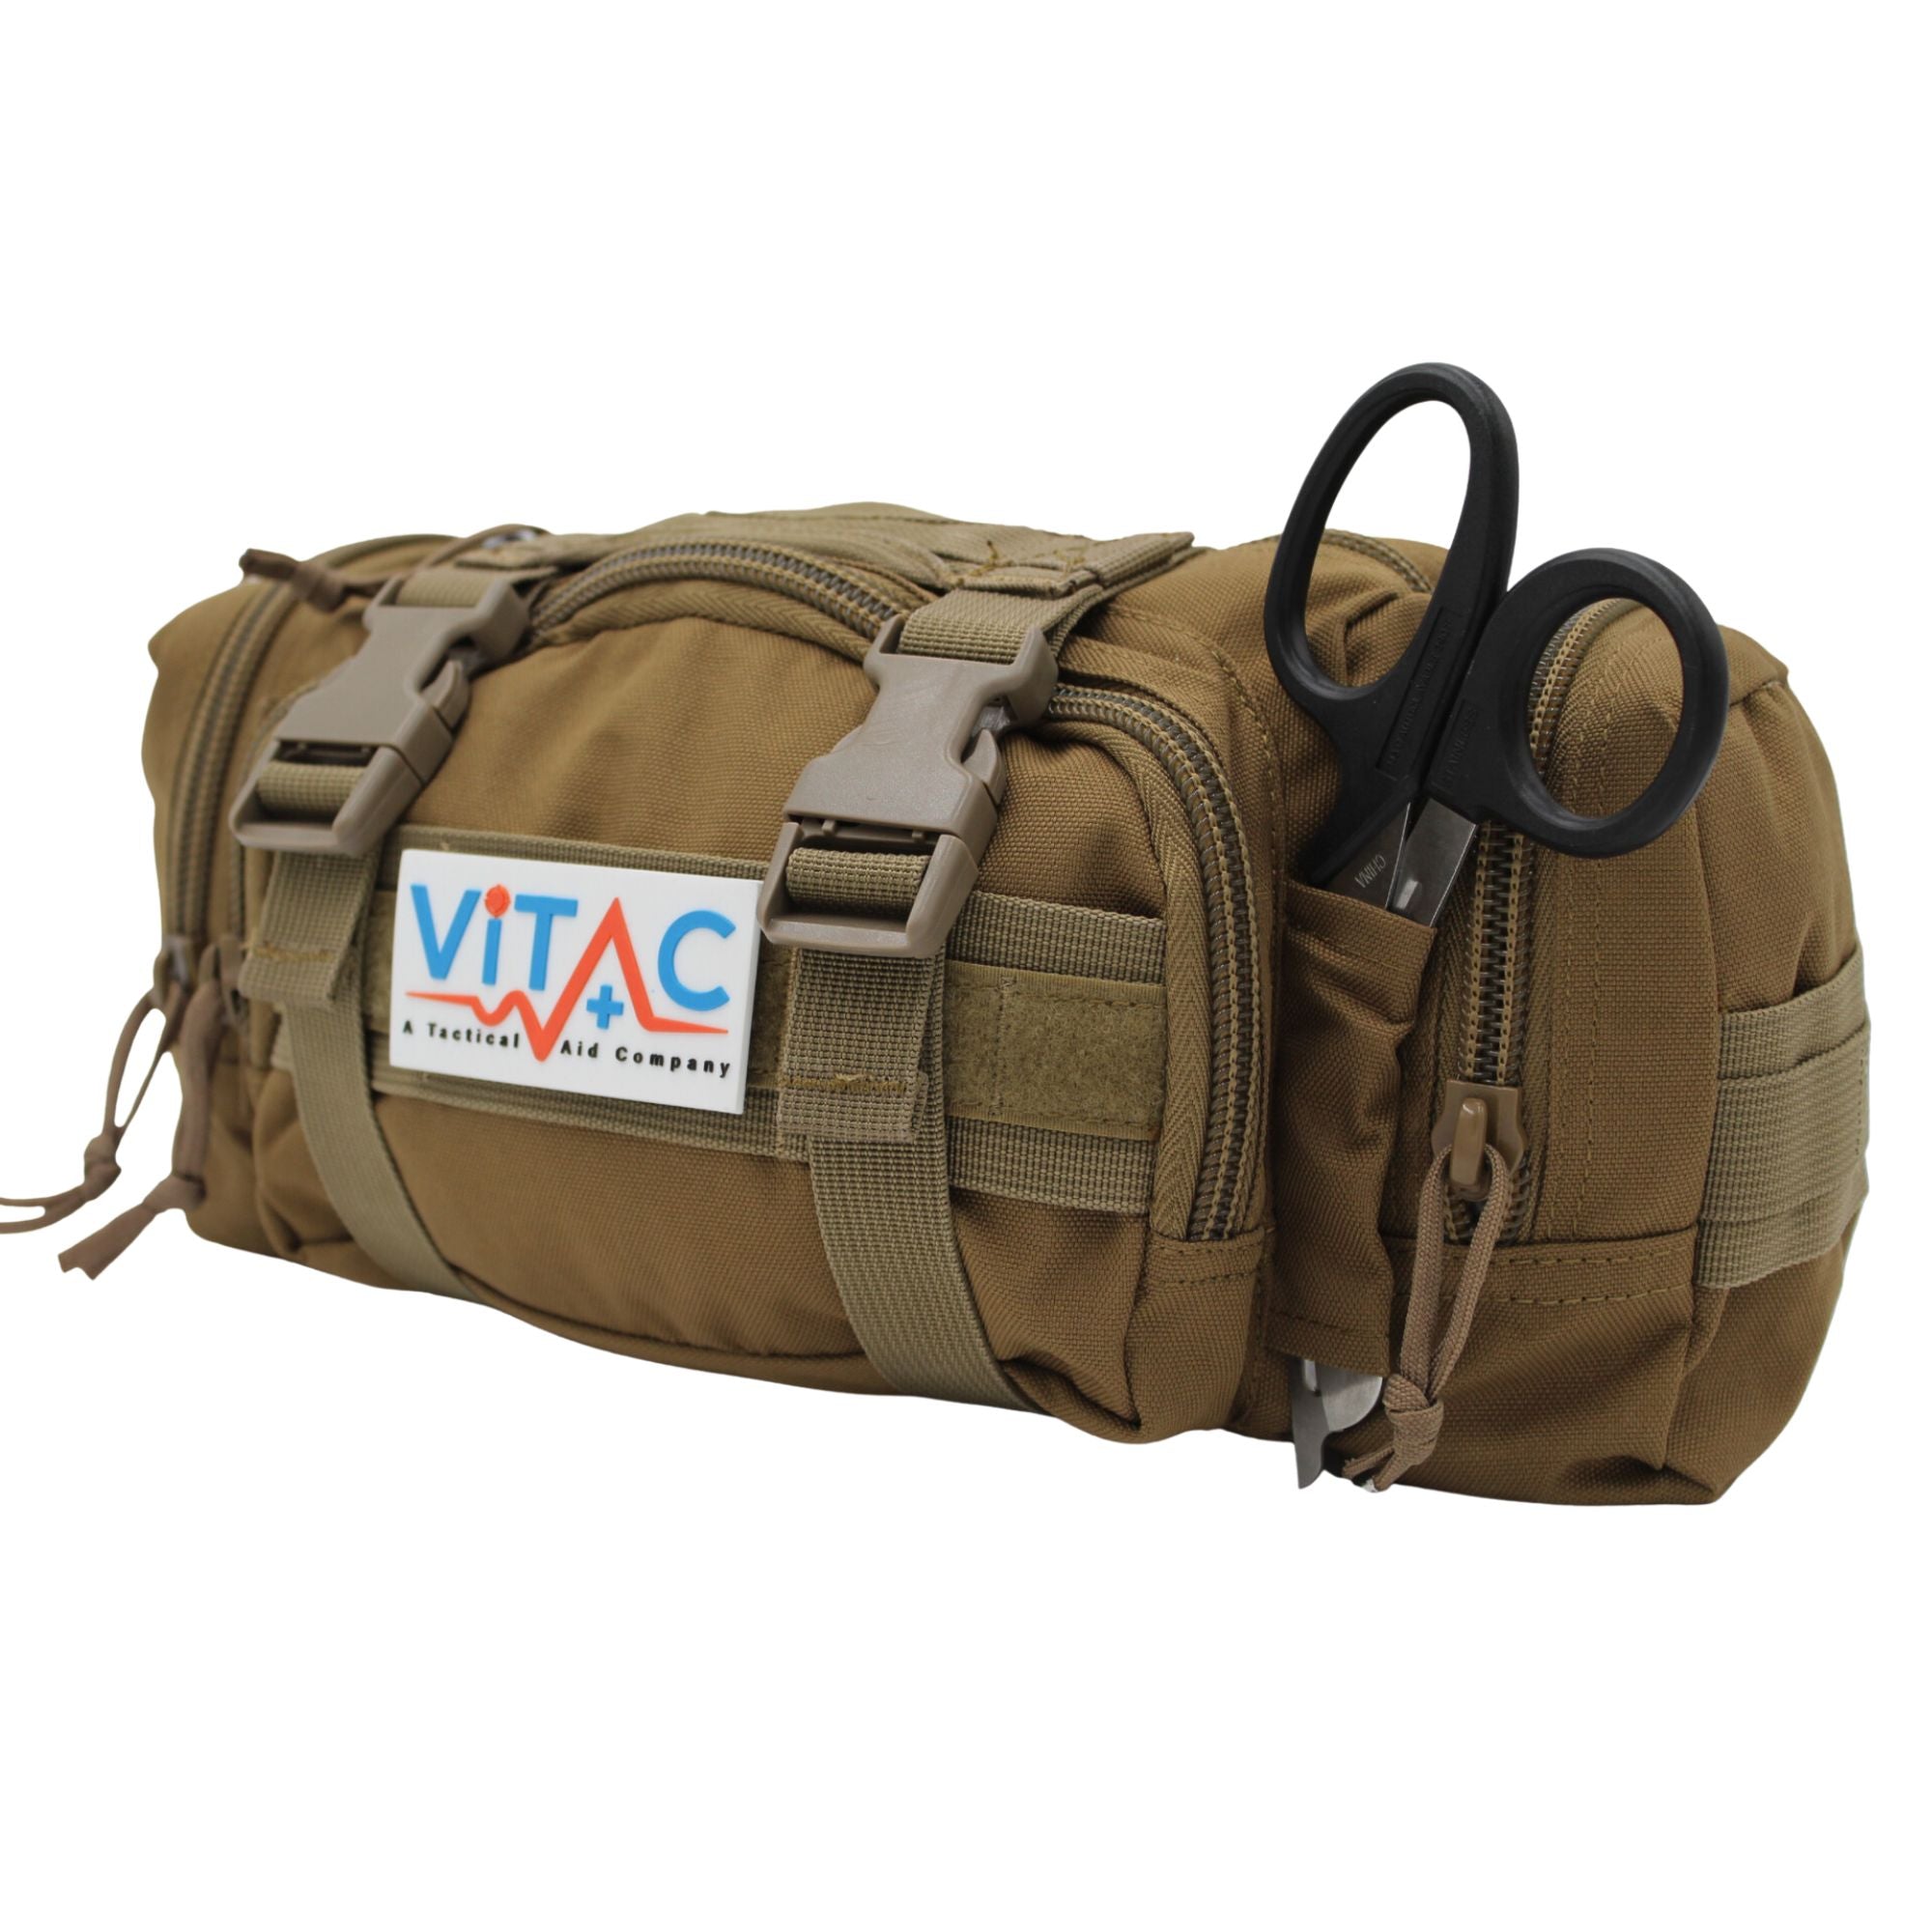 ViTAC Advanced Adventurer First Aid Kit Tan